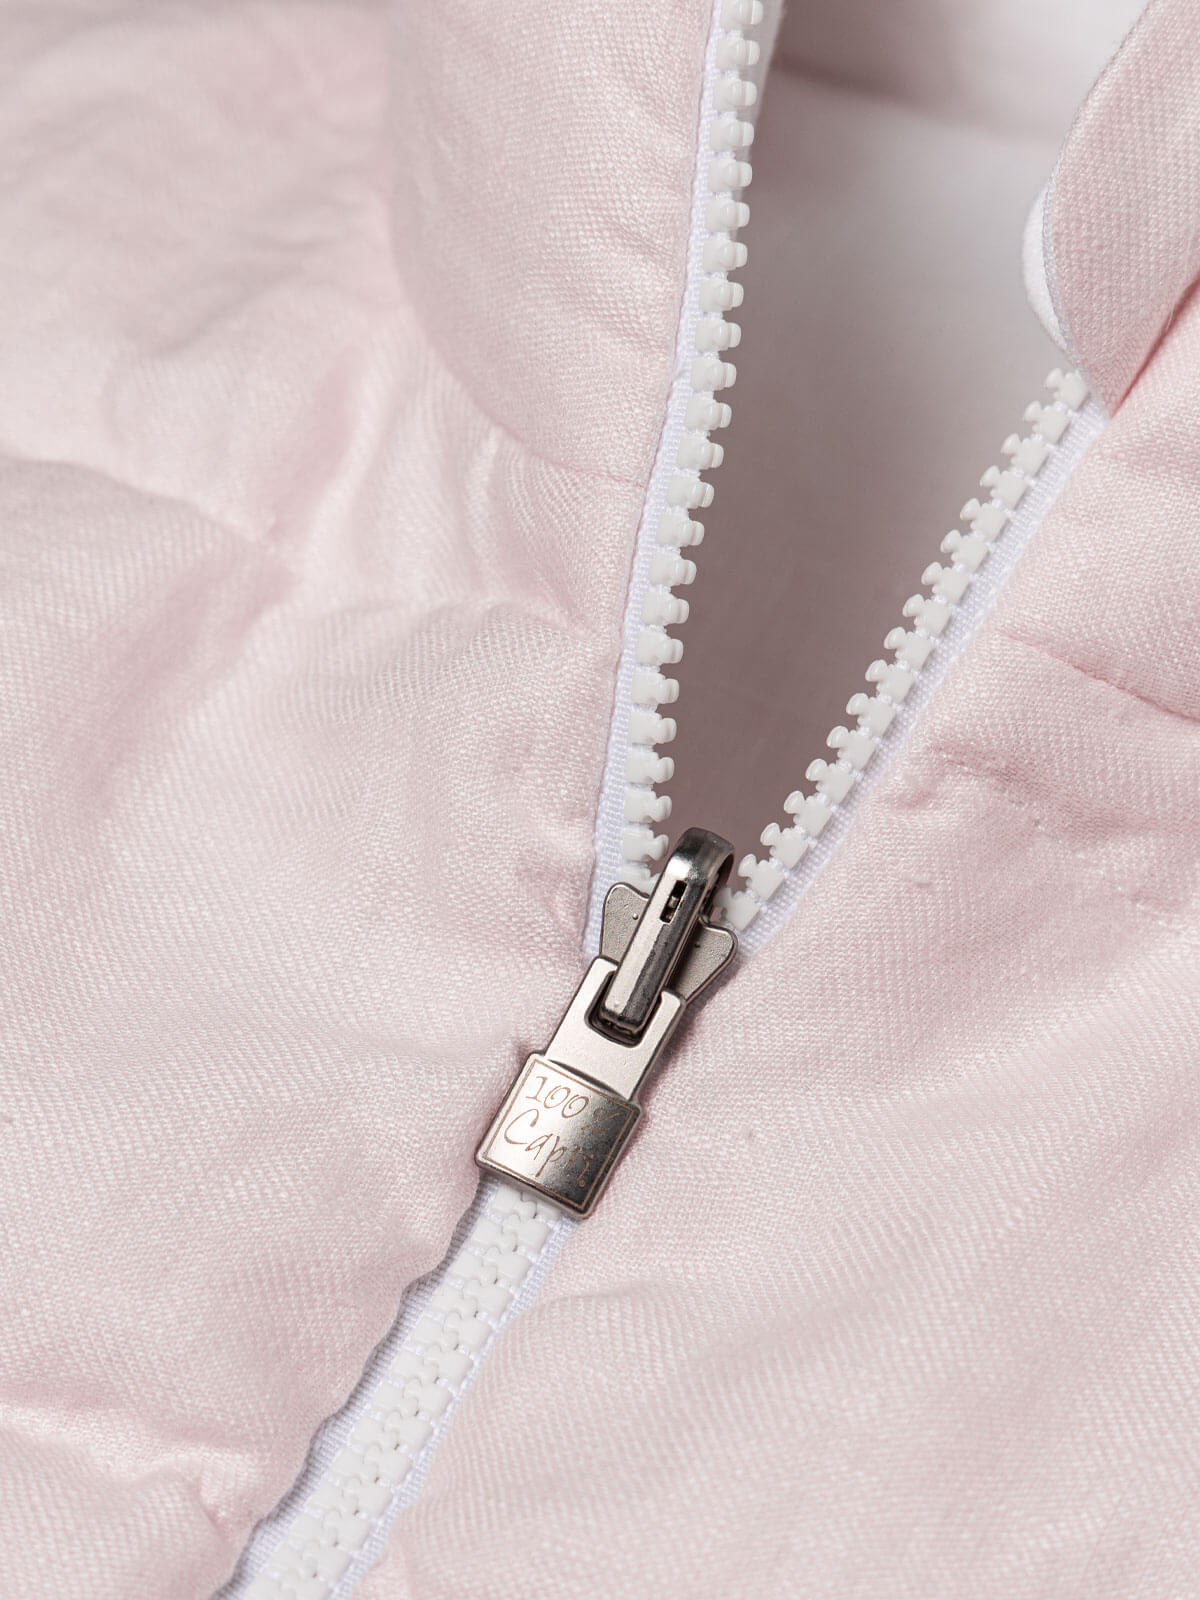 Gilet Ischia reversible for woman 100% Capri pink linen gilet detail